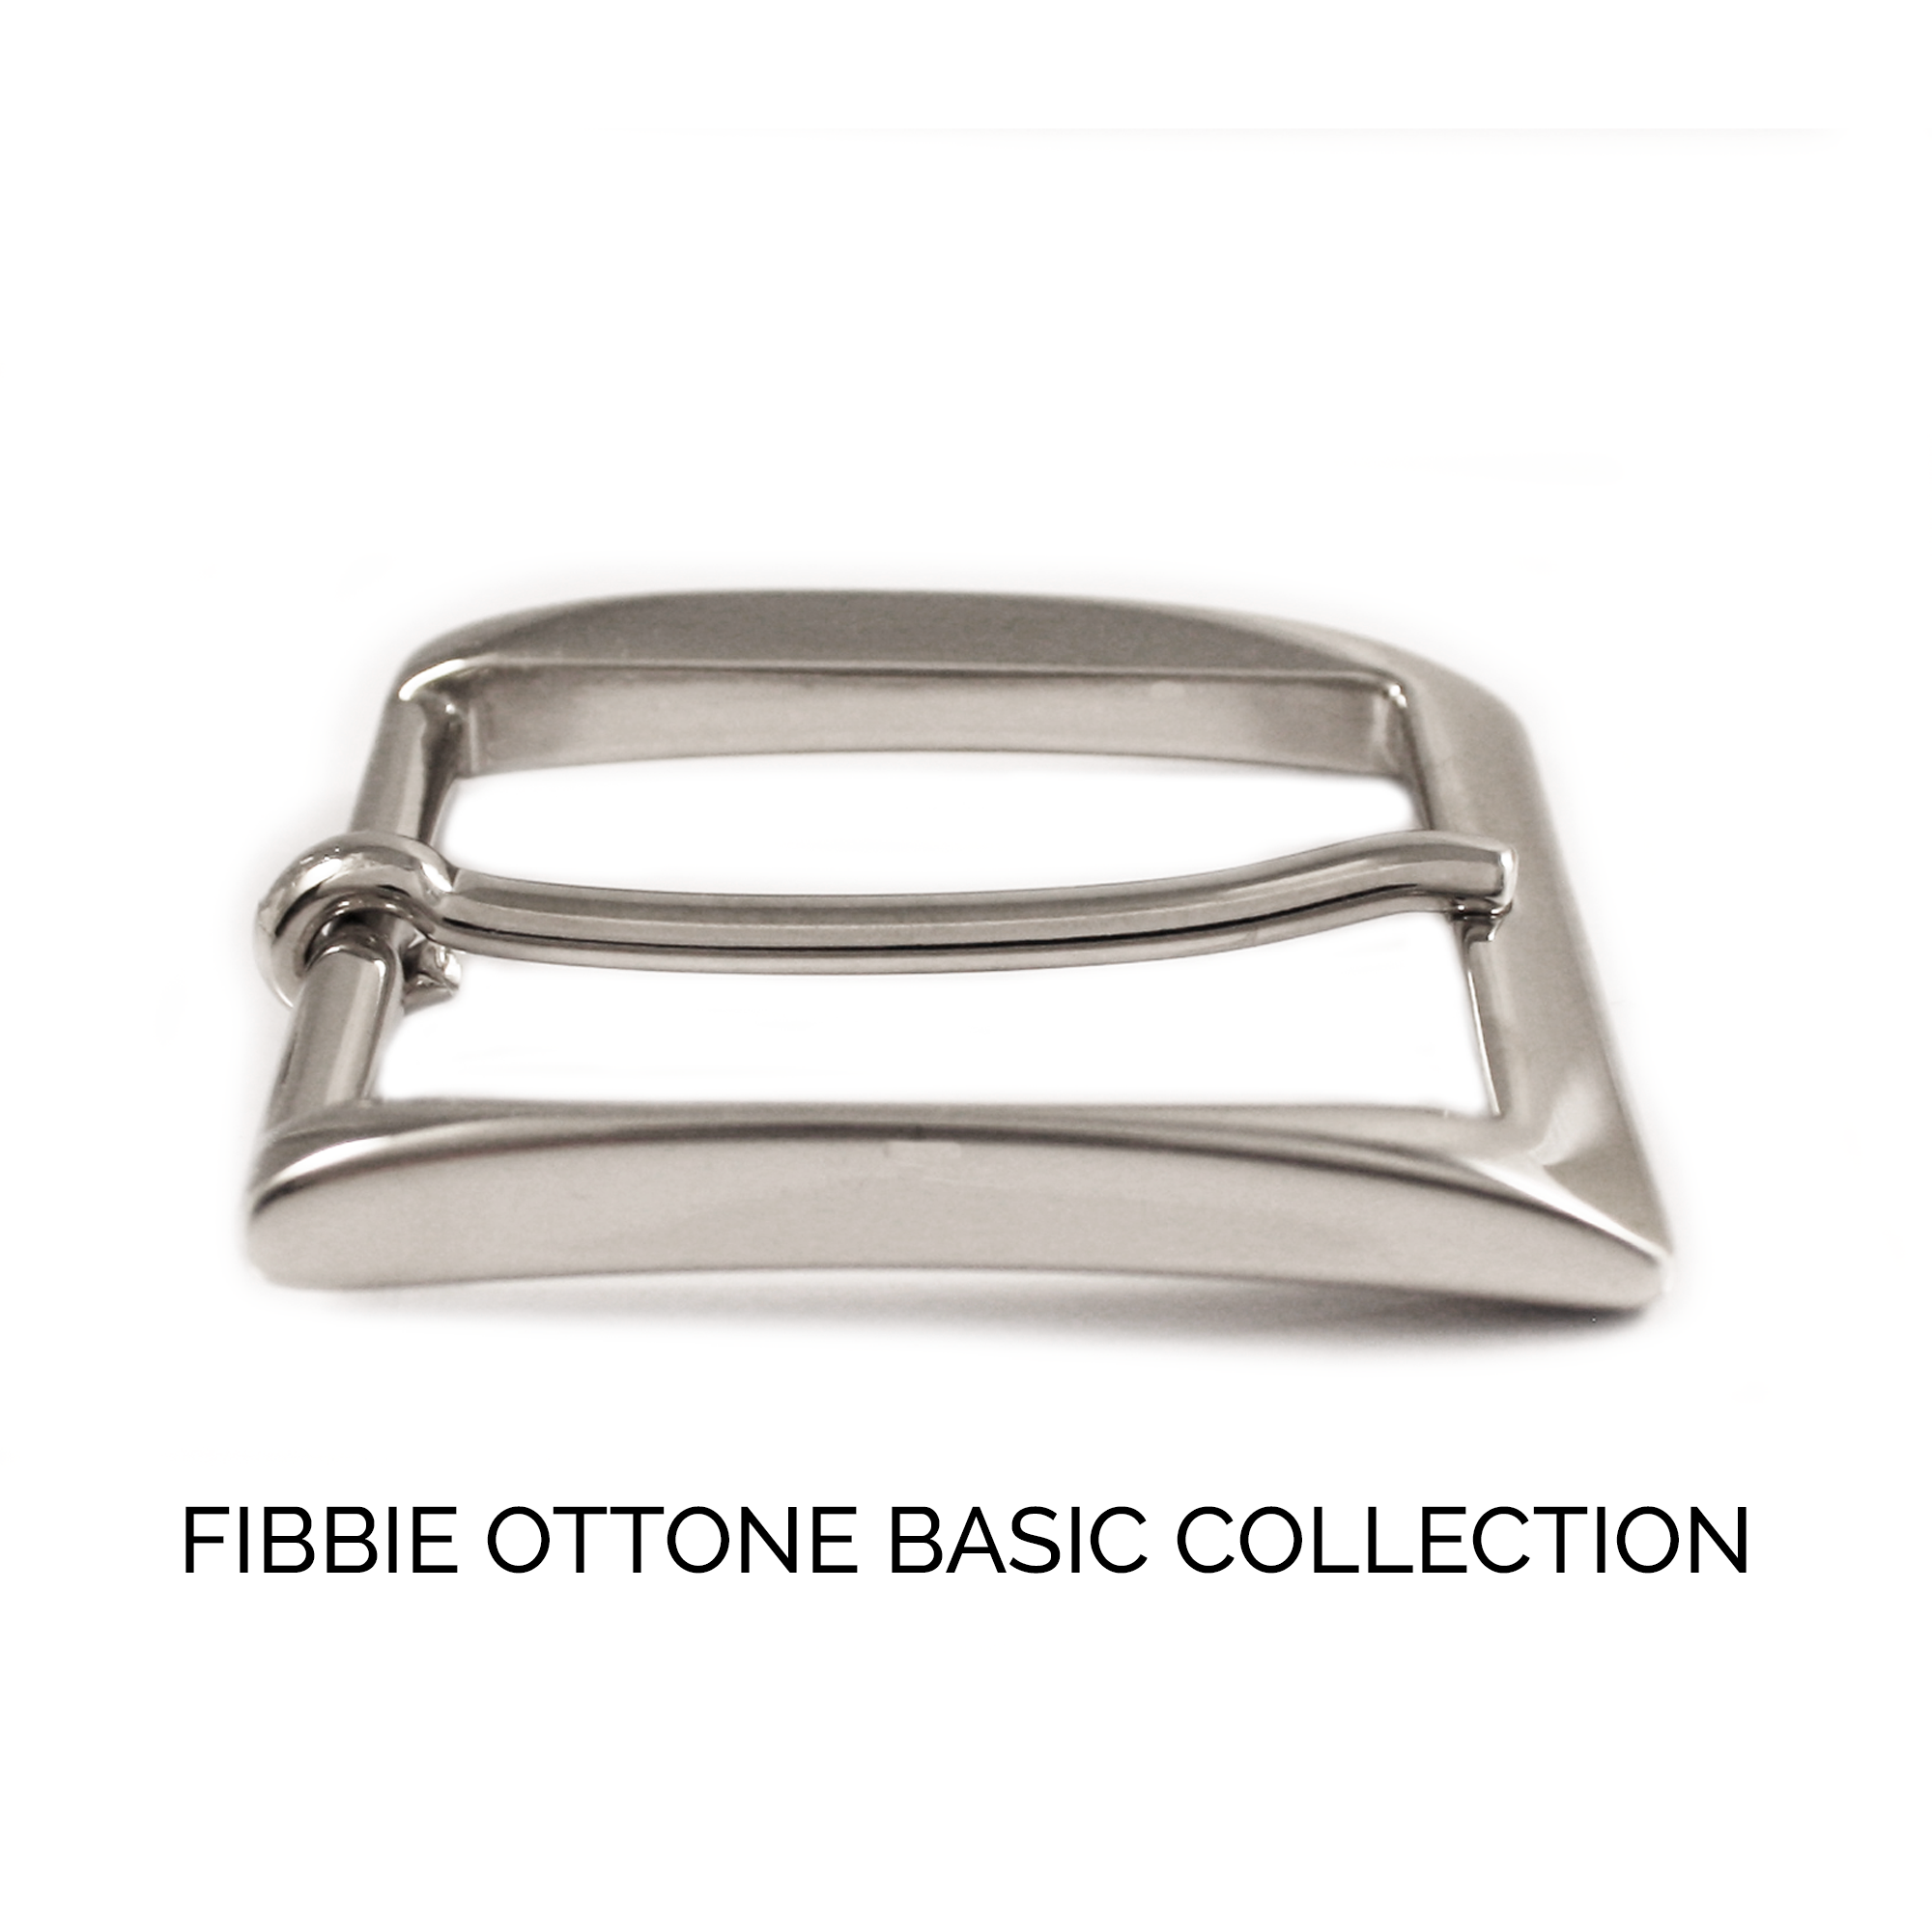 Fibbie-ottone-basic-collection